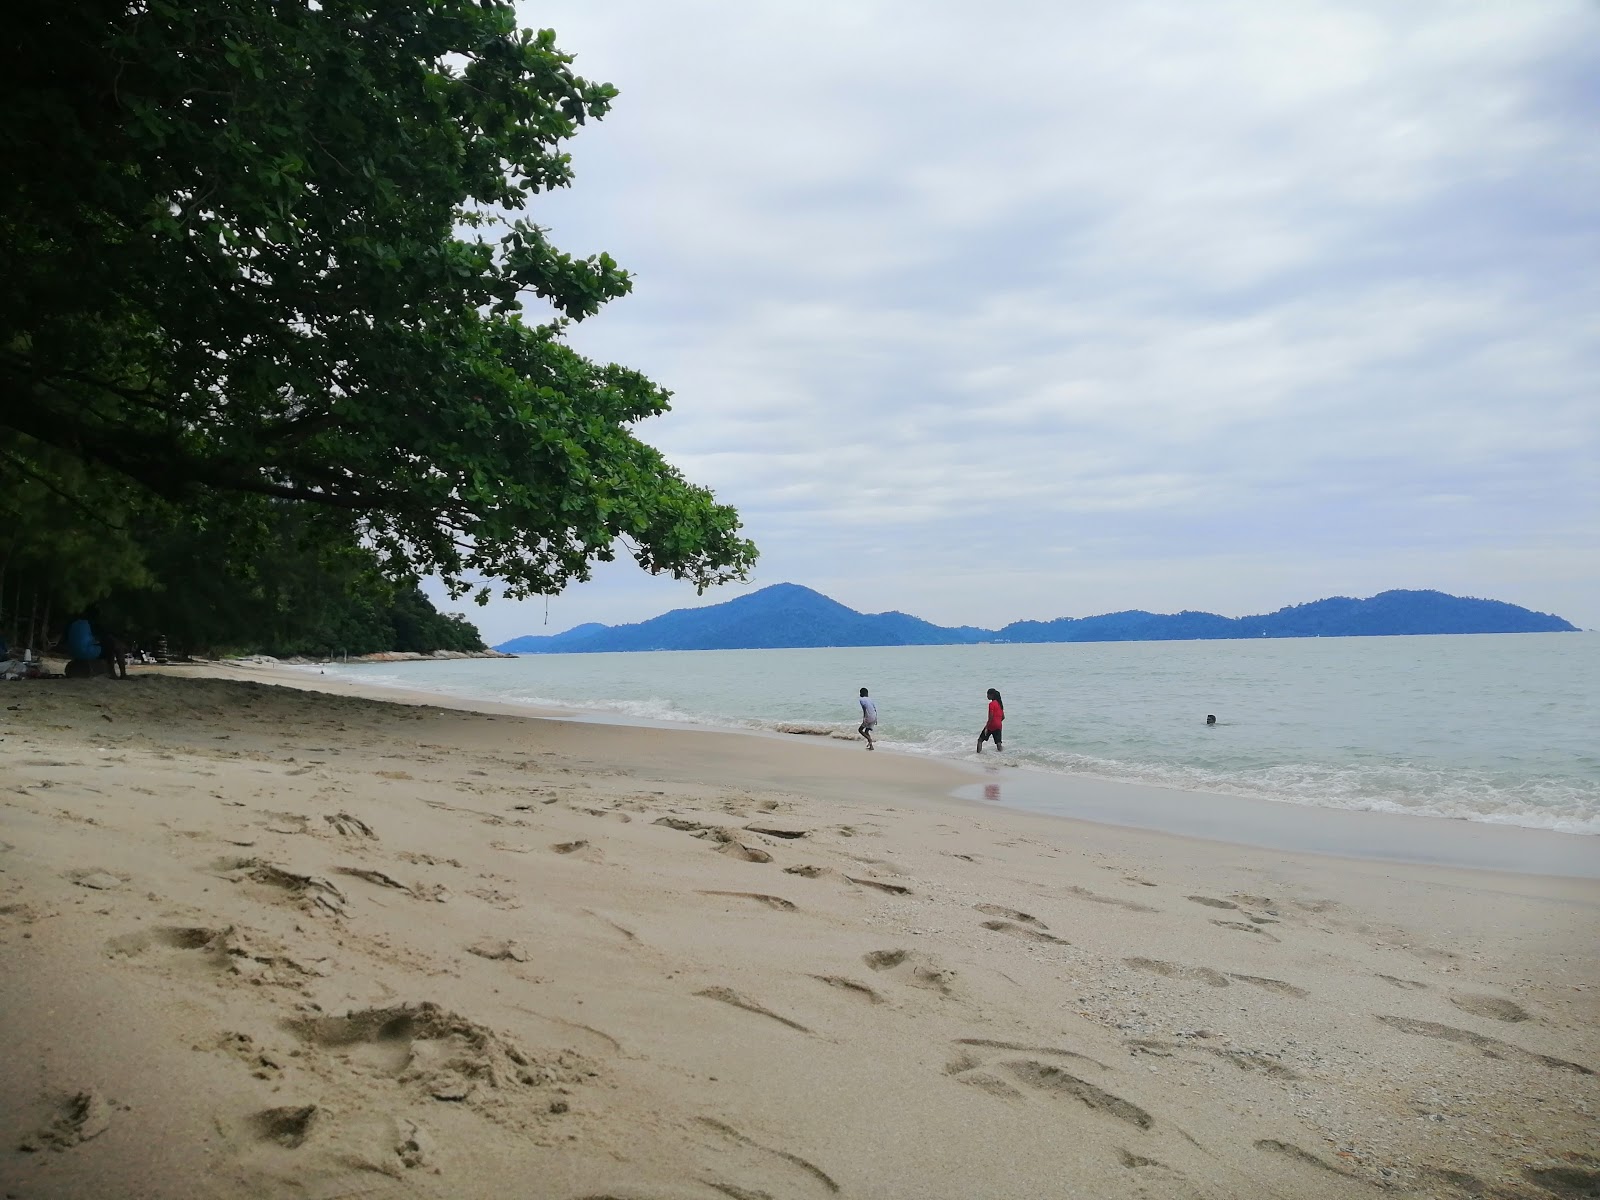 Teluk Senangin Beach photo #7